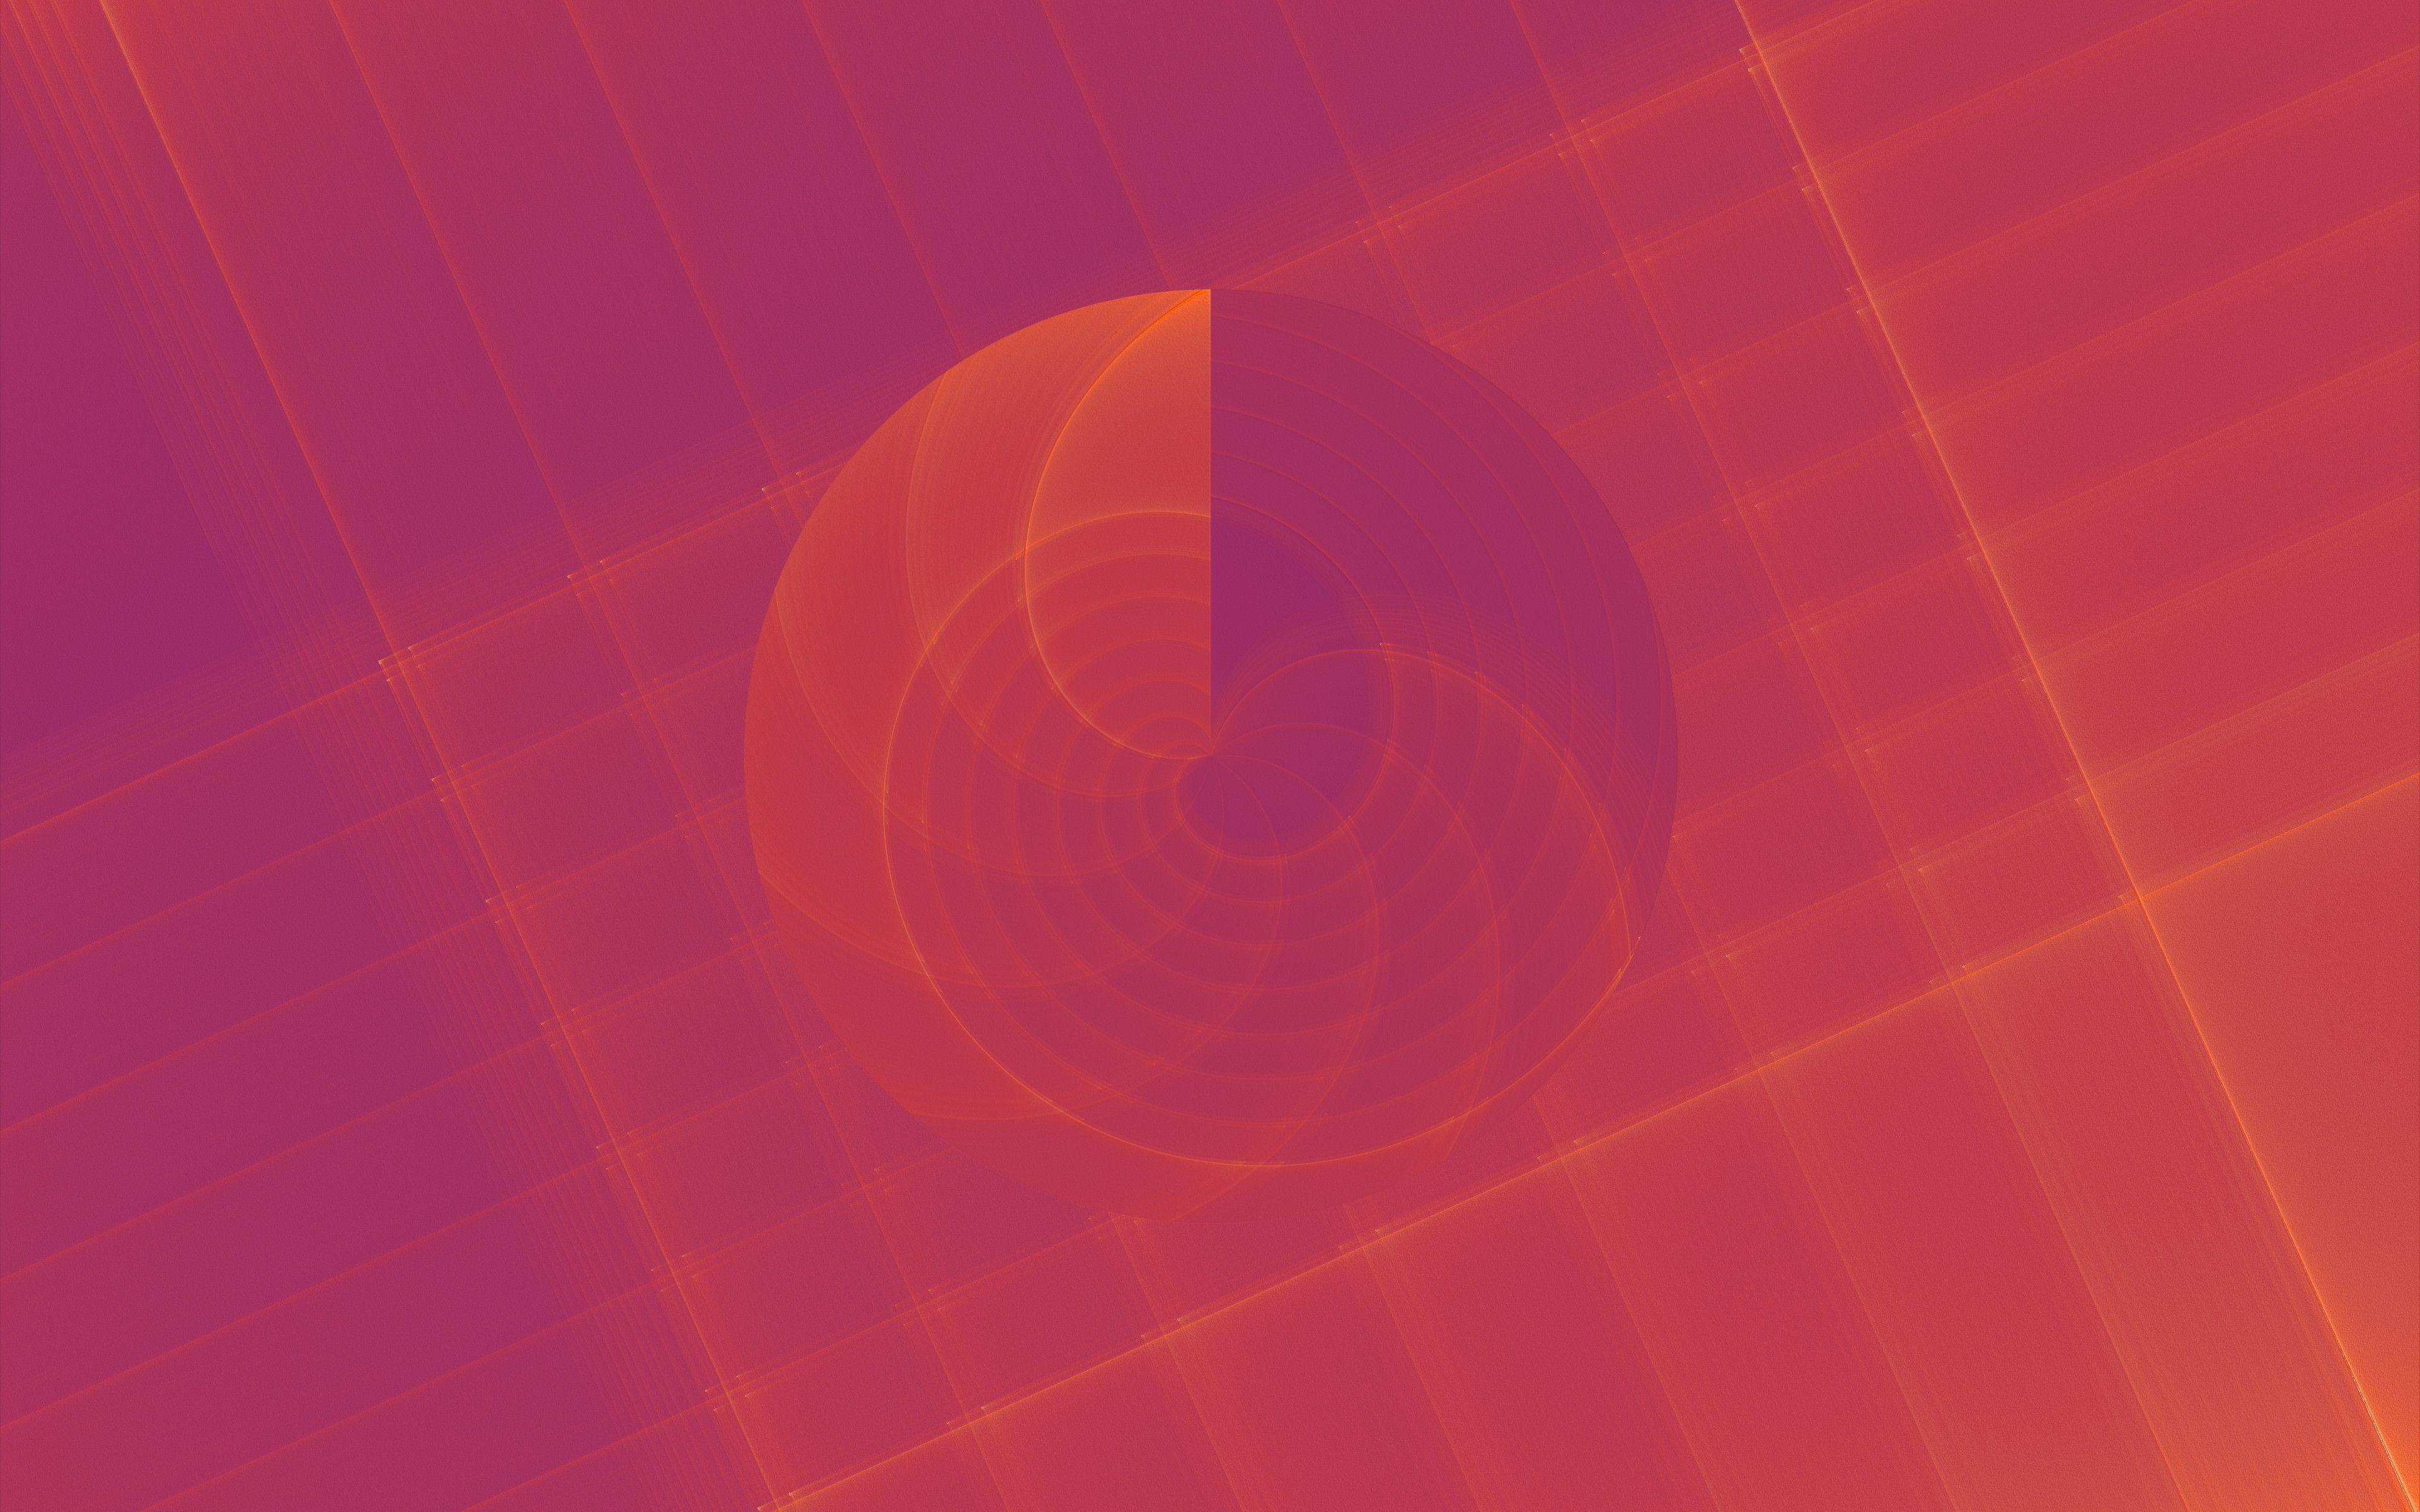 Ubuntu 16.04 LTS (Xenial Xerus) Default Wallpaper Revealed